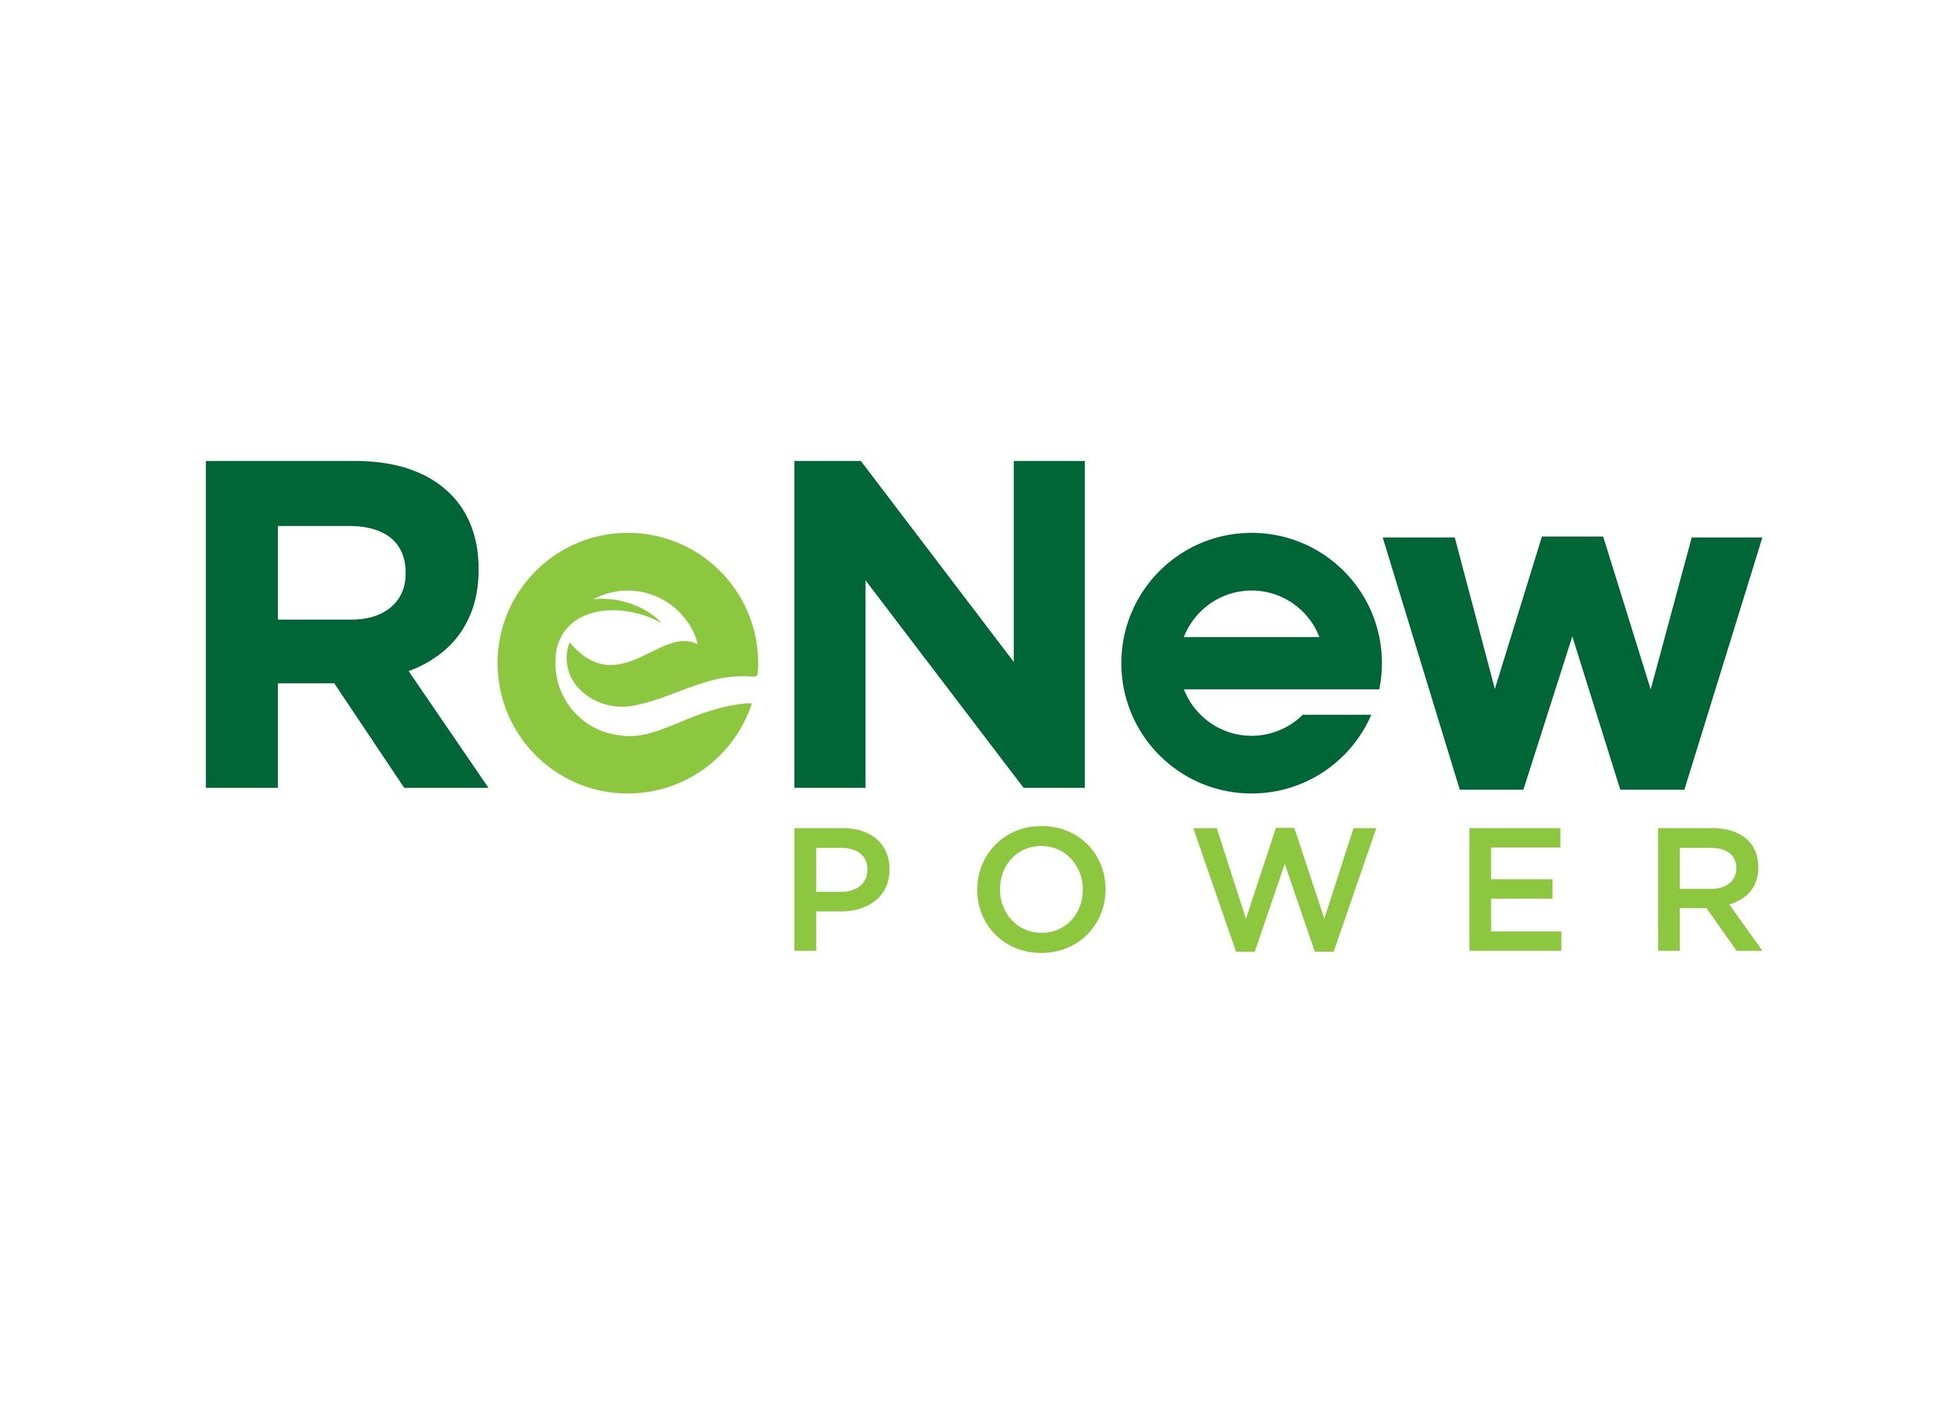 Renew power new logo